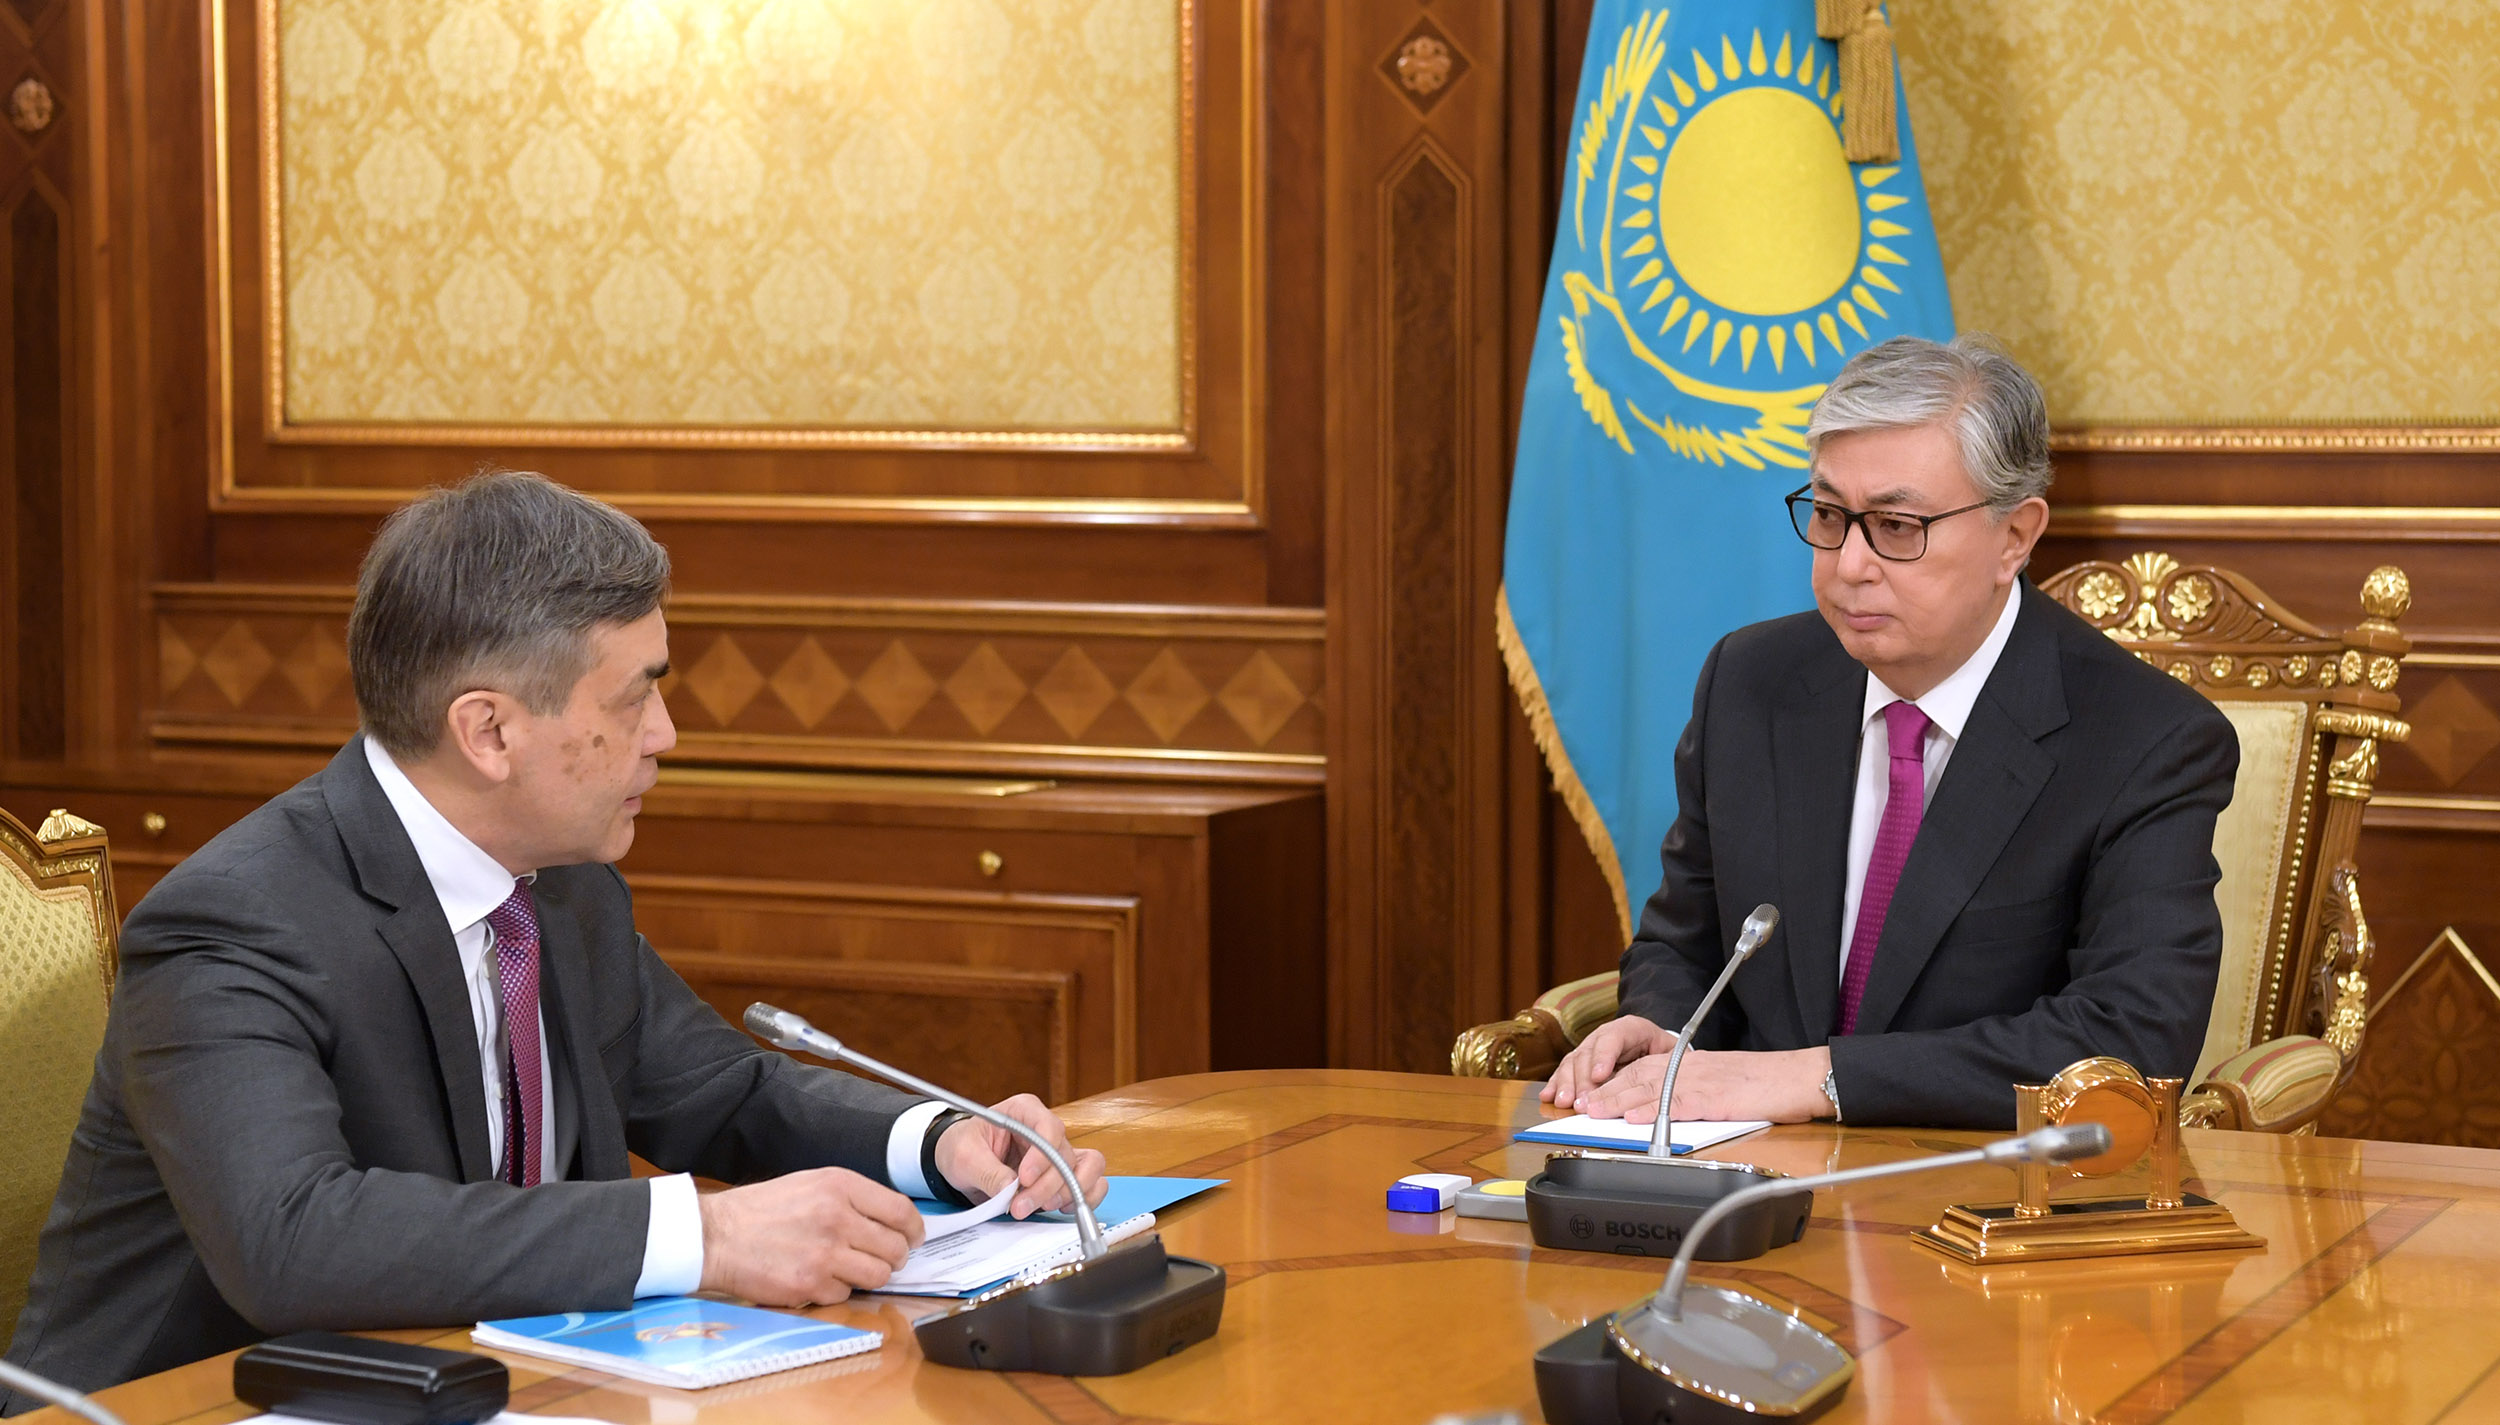 Head of State meets with Nurlan Yermekbayev, Minister of Defense